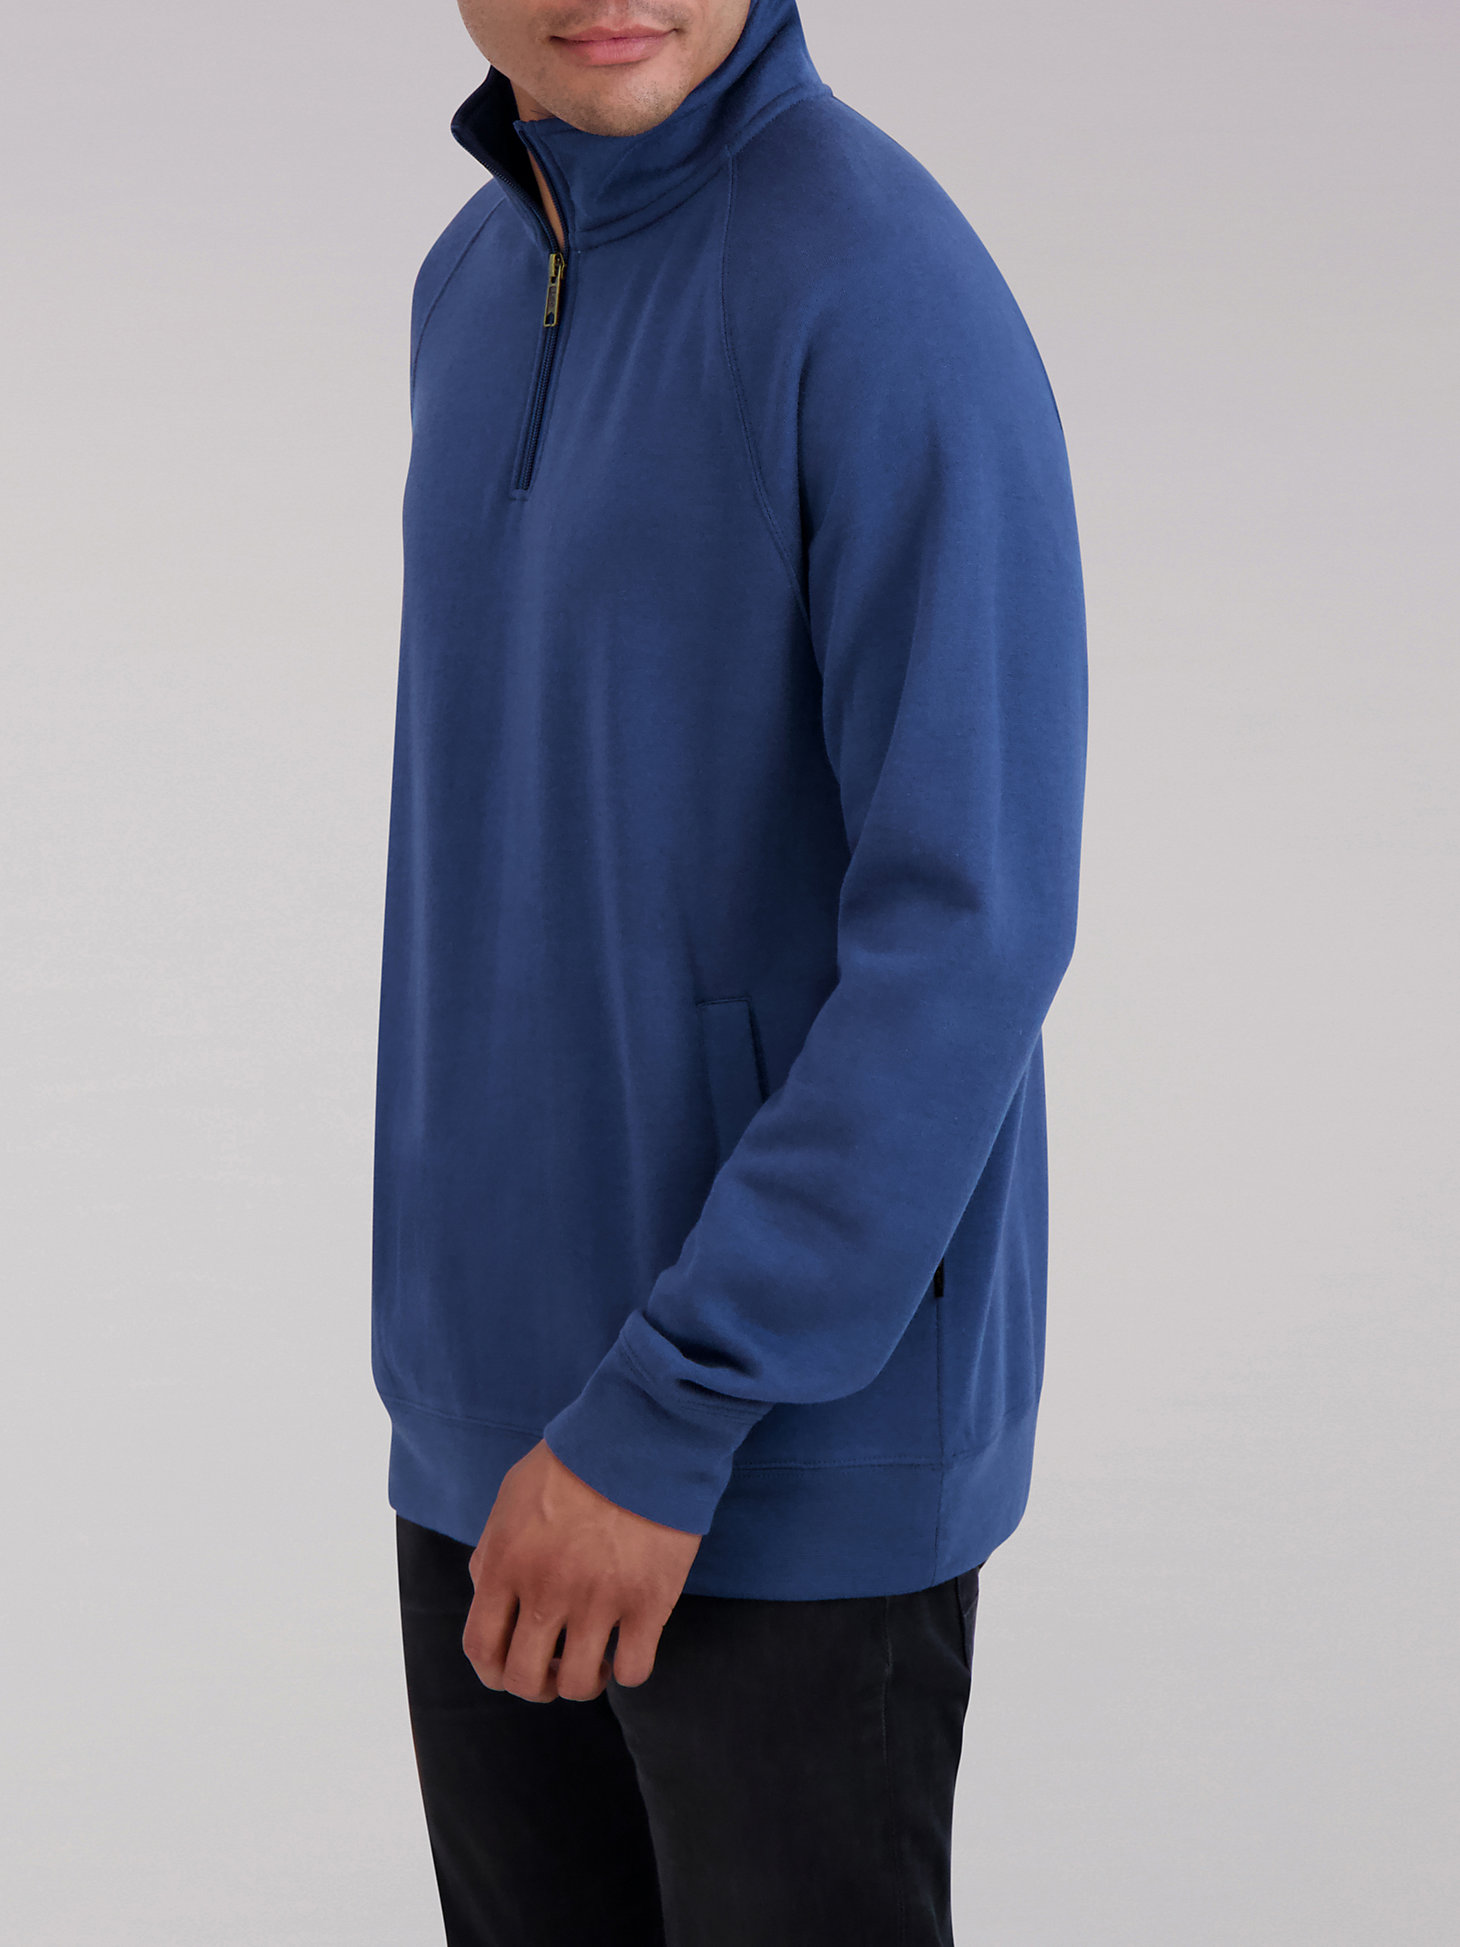 Men's Heavyweight Fleece Quarter Zip Sweater in Blue Denim alternative view 3